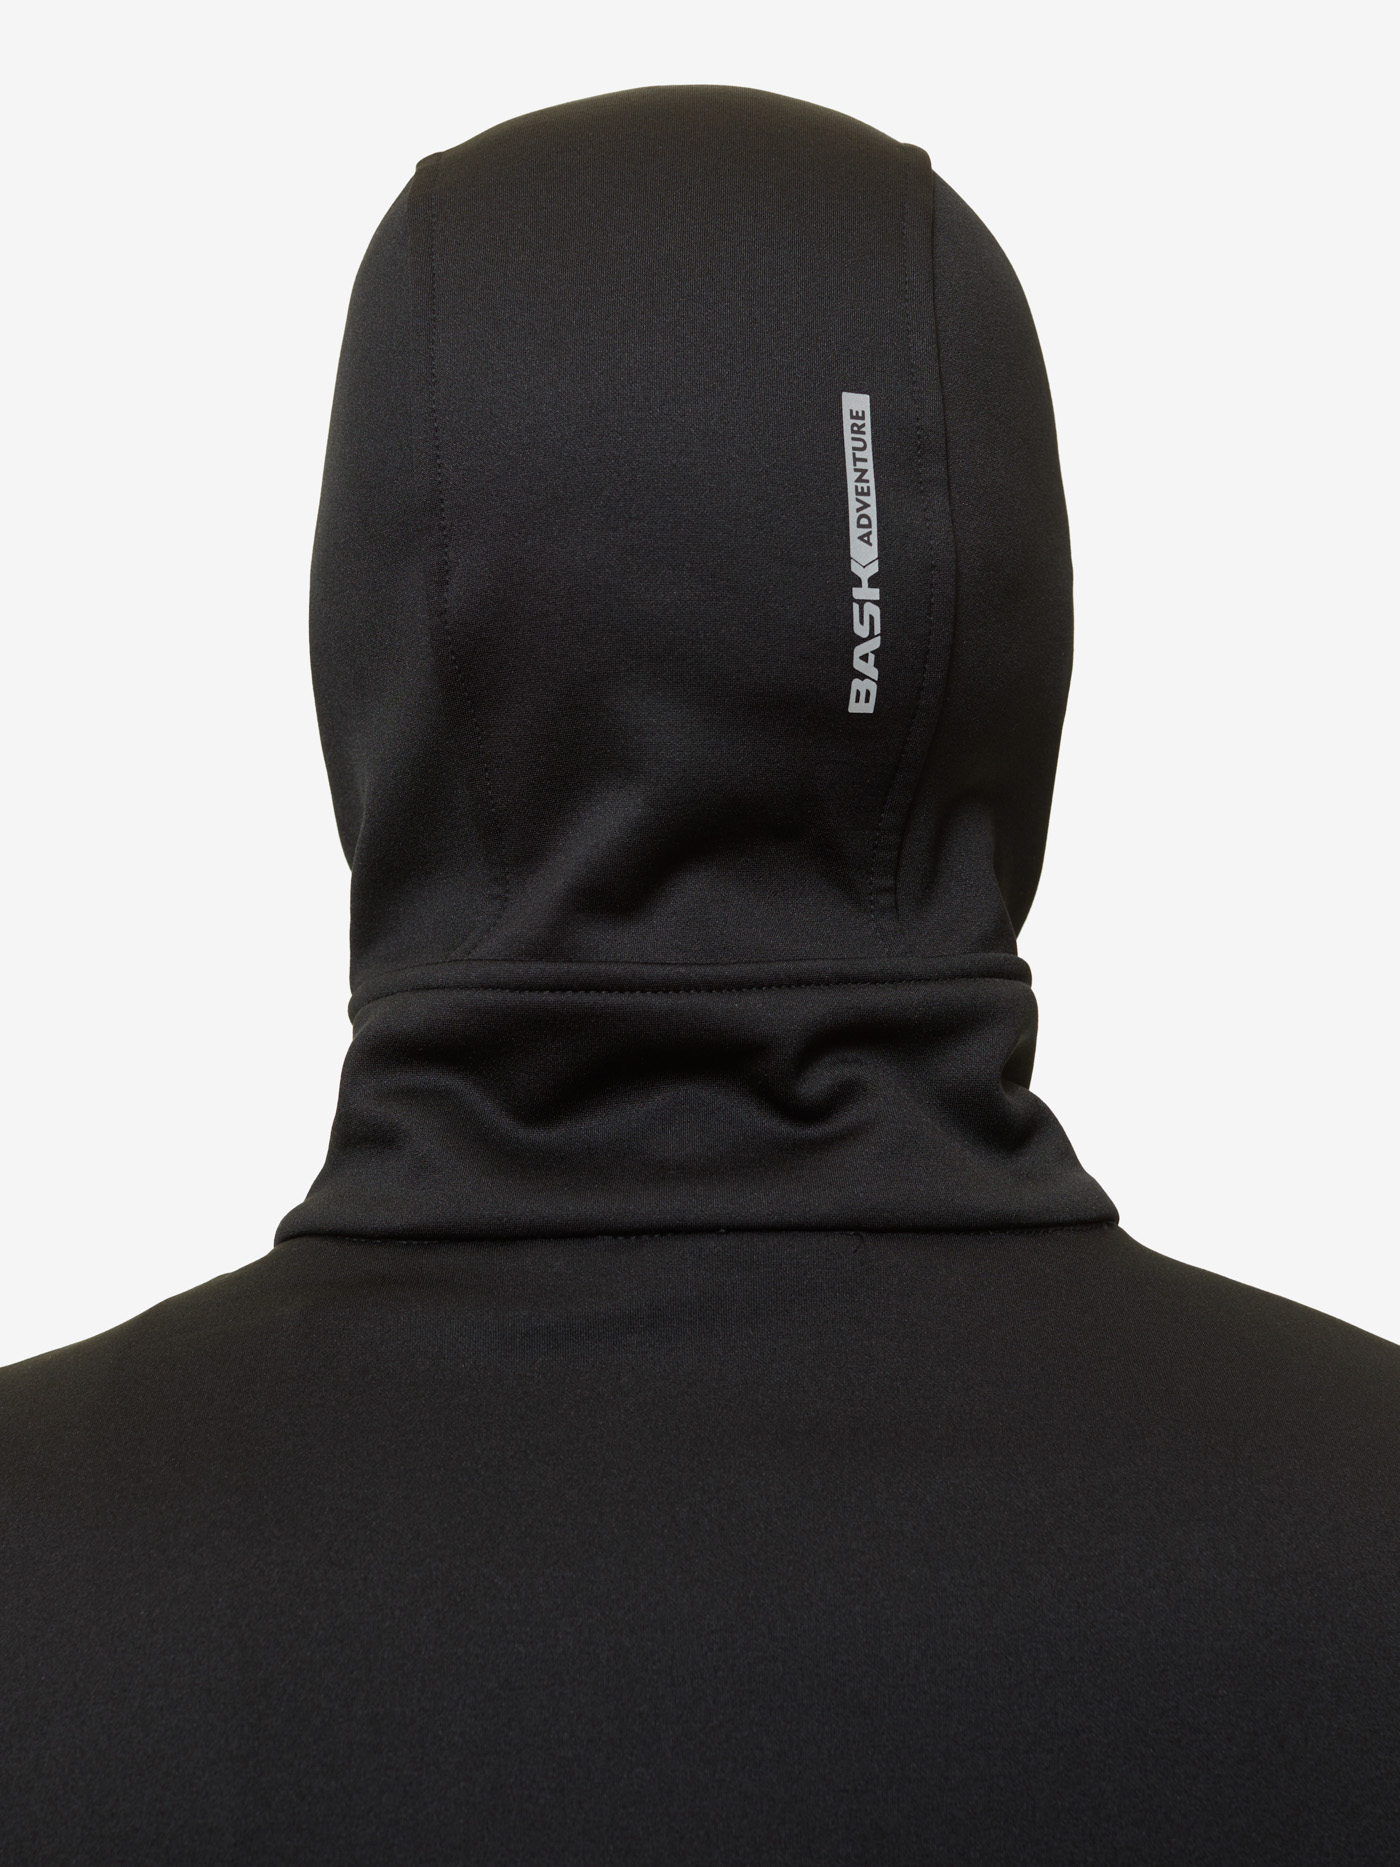 Куртка BASK, размер 46, цвет черный 1246V2-9009-046 Champion v2 - фото 7